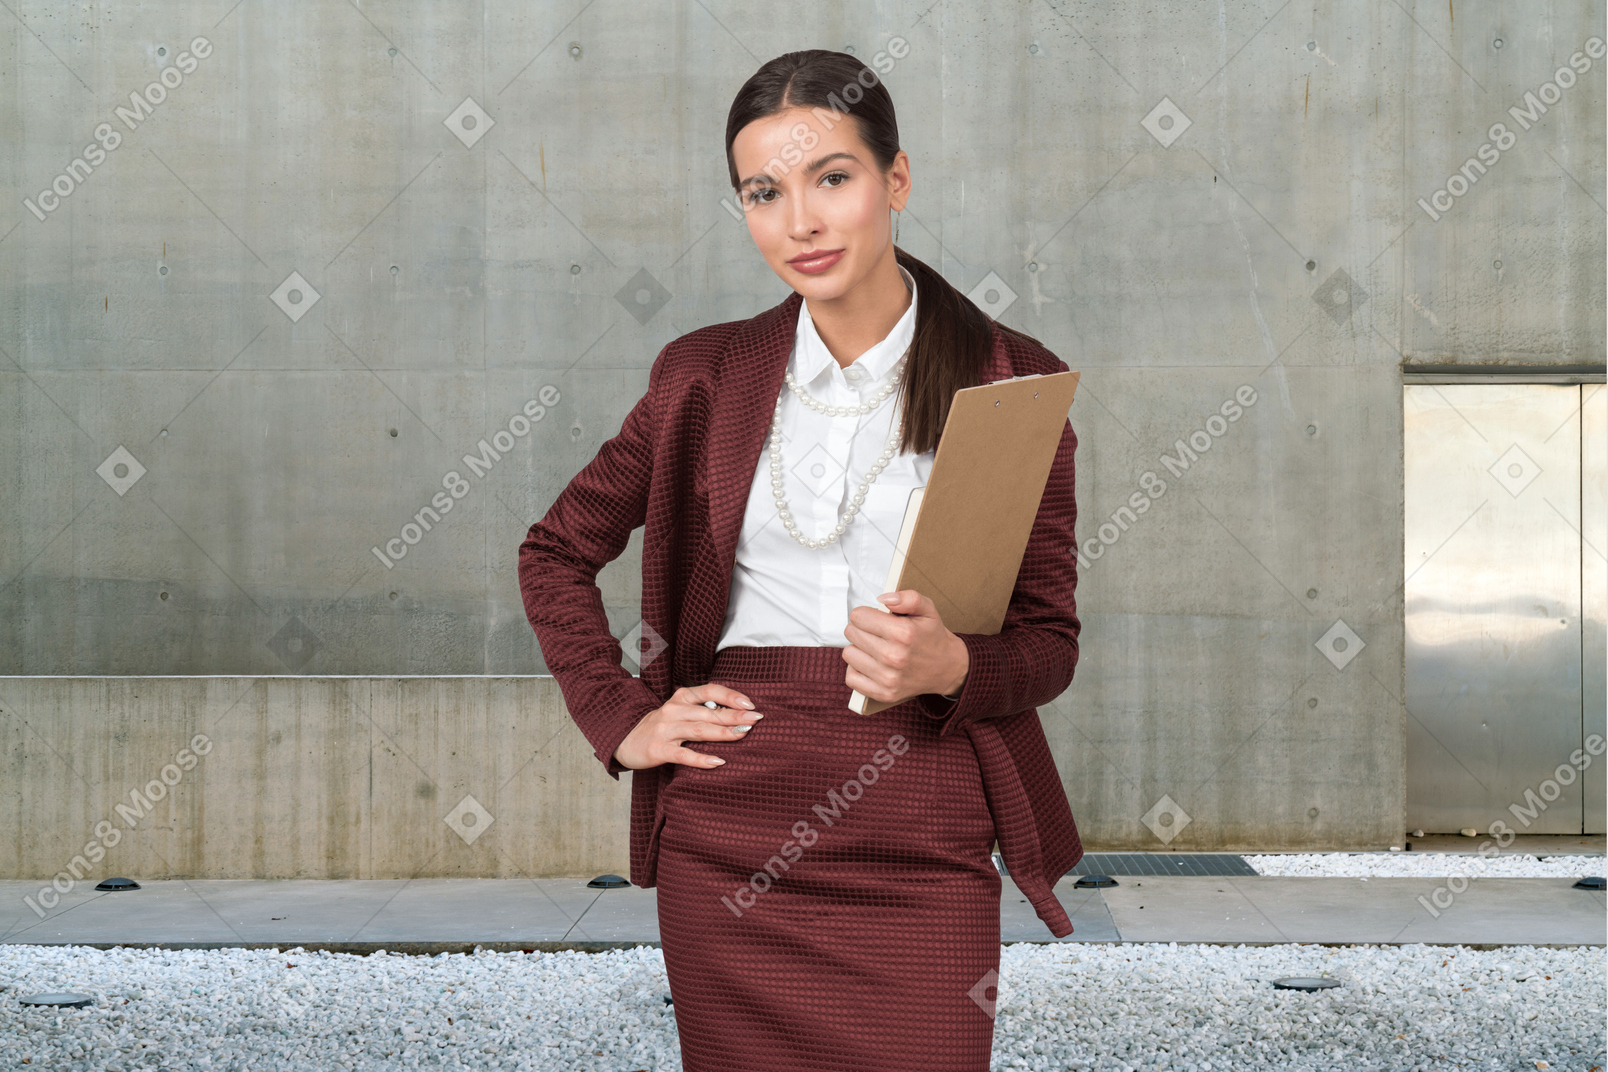 Female real estate agent holding folder